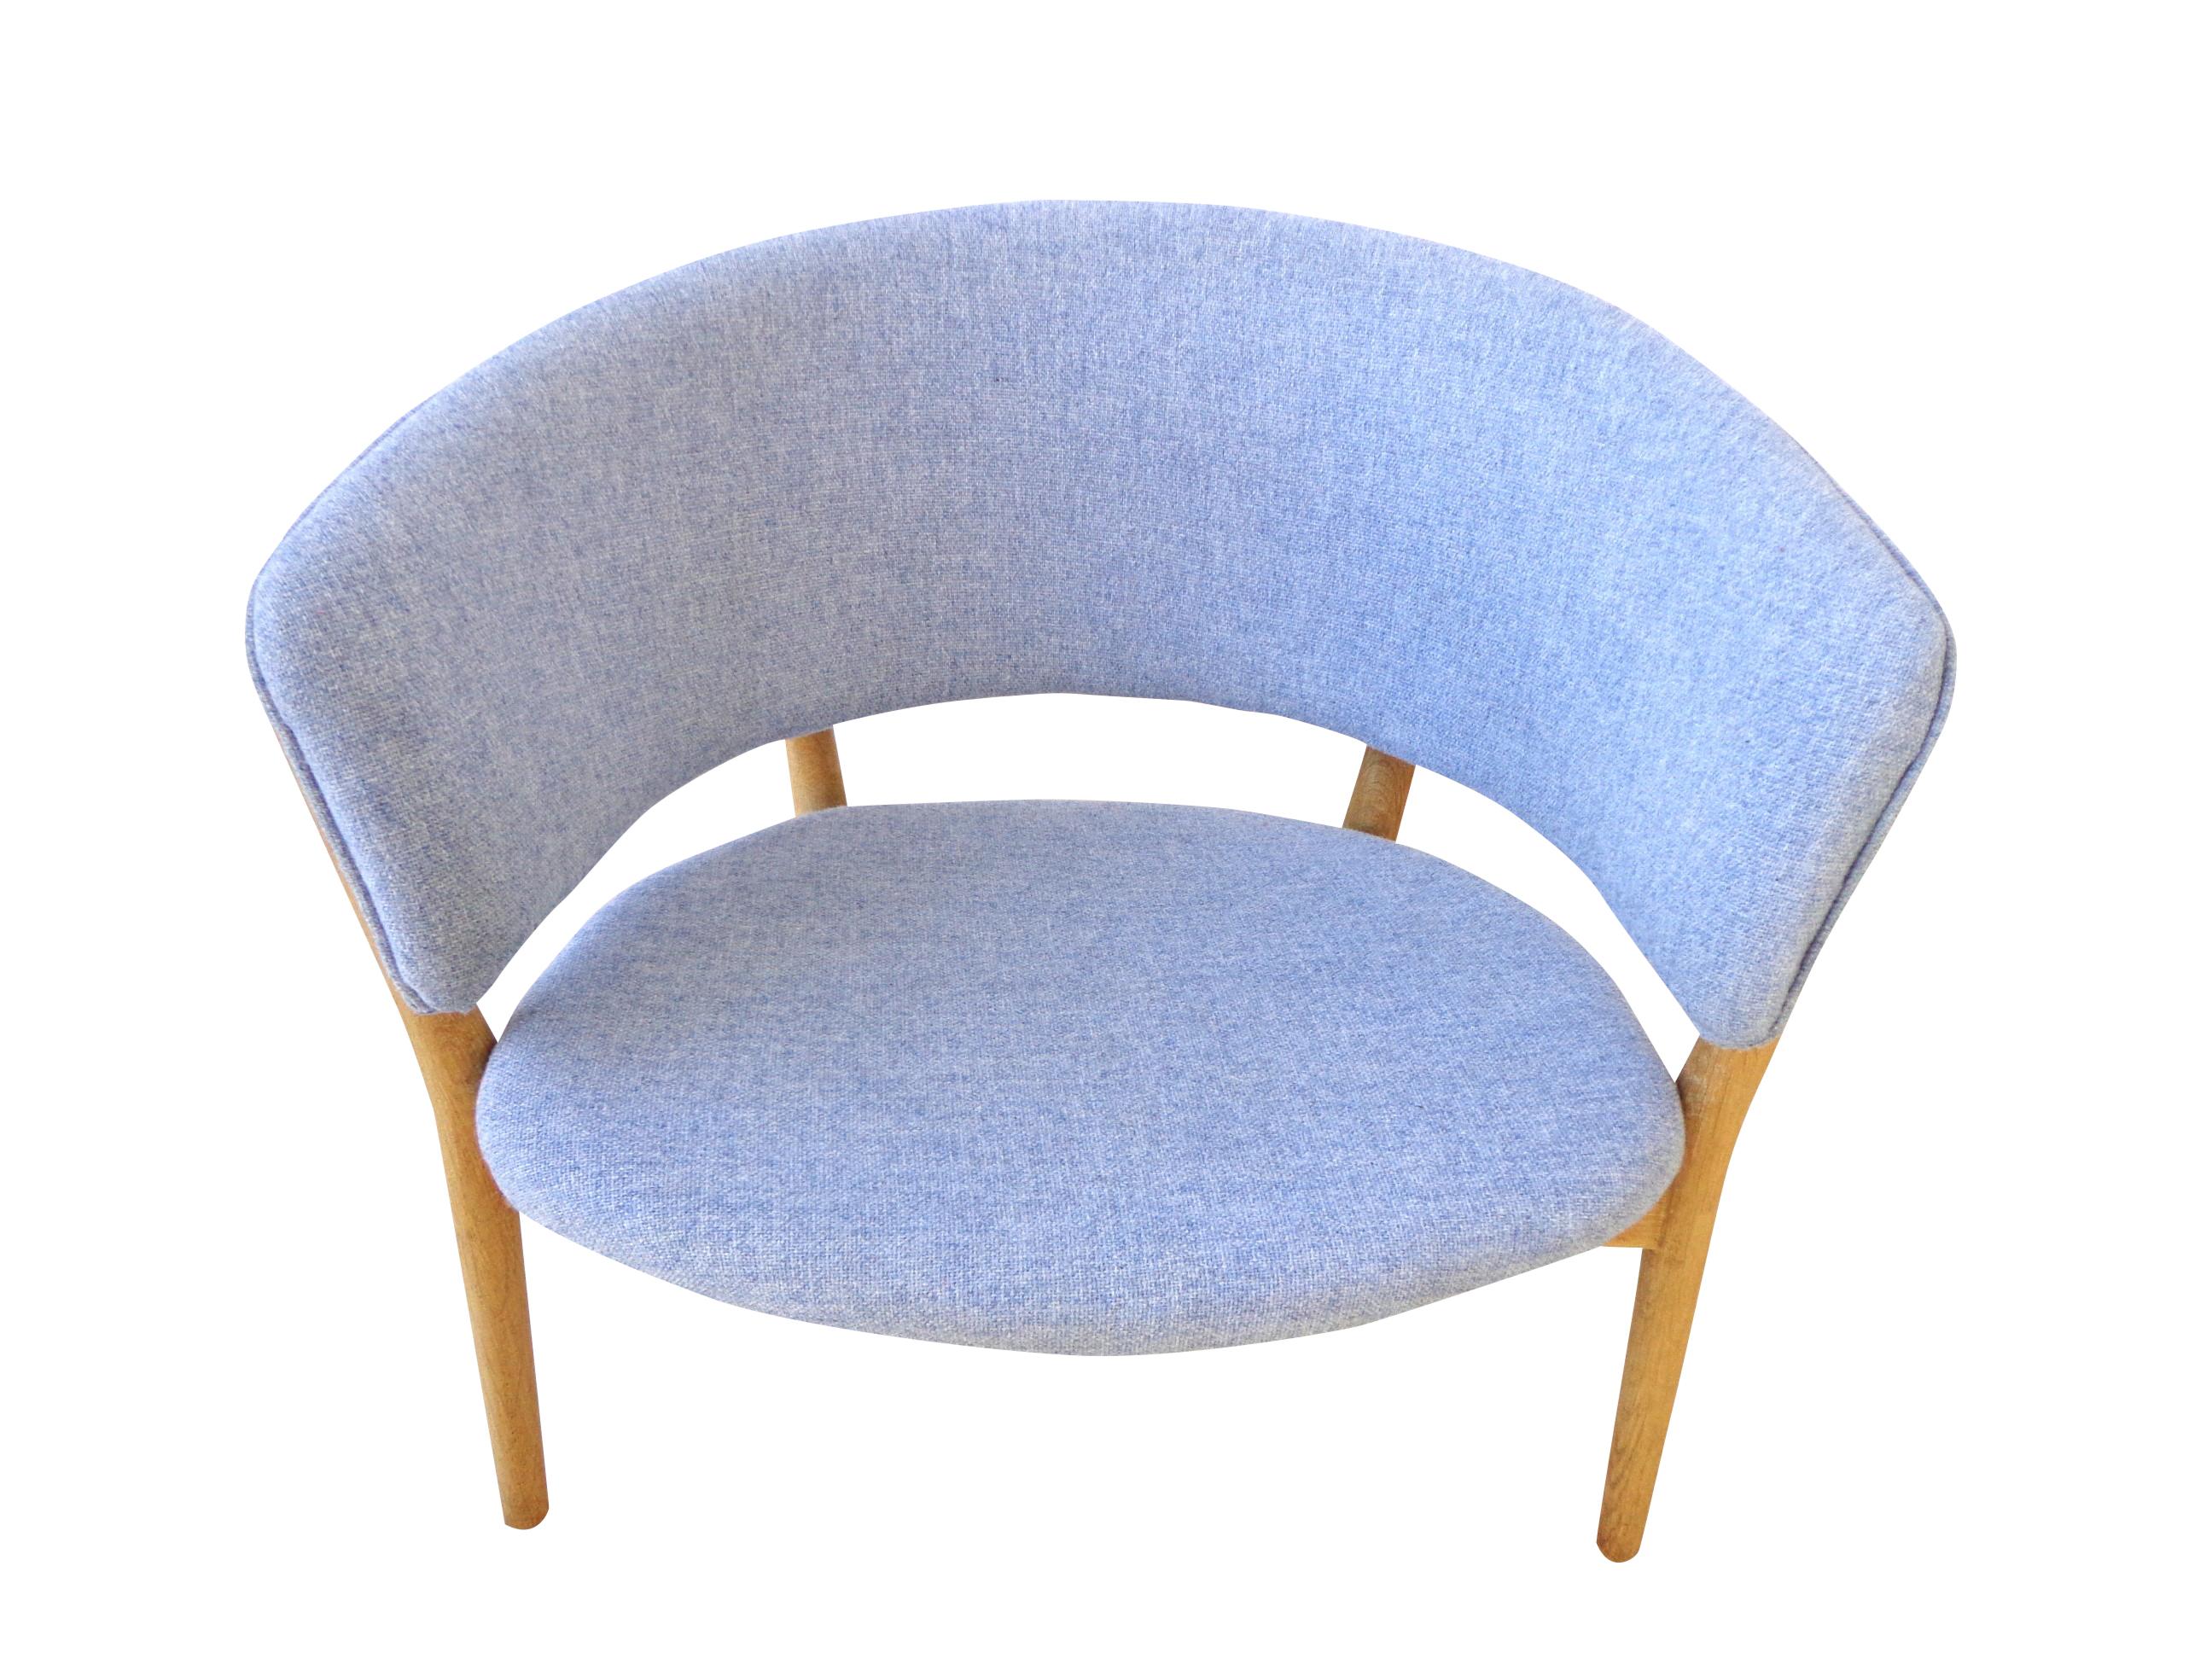 Nanna Ditzel Pair of Lounge Chairs in Wool by Soren Willadsen, Denmark, 1950s For Sale 5